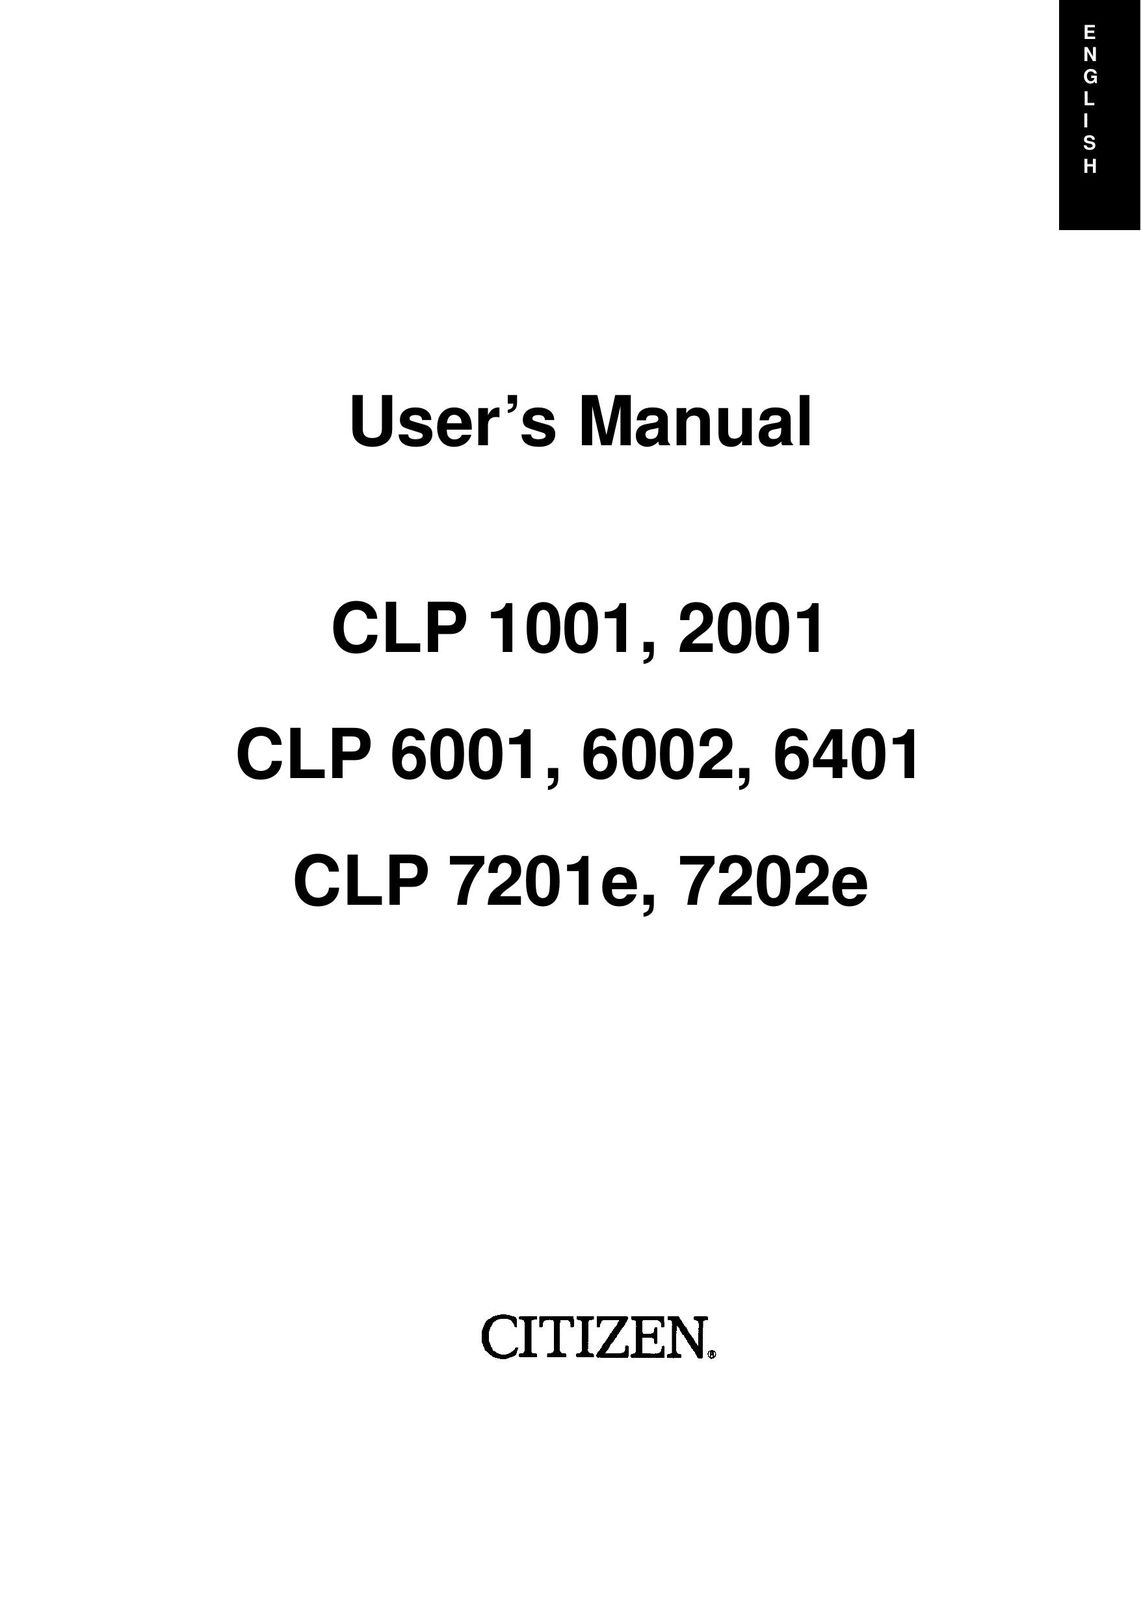 Citizen Systems CLP 6002 Printer User Manual